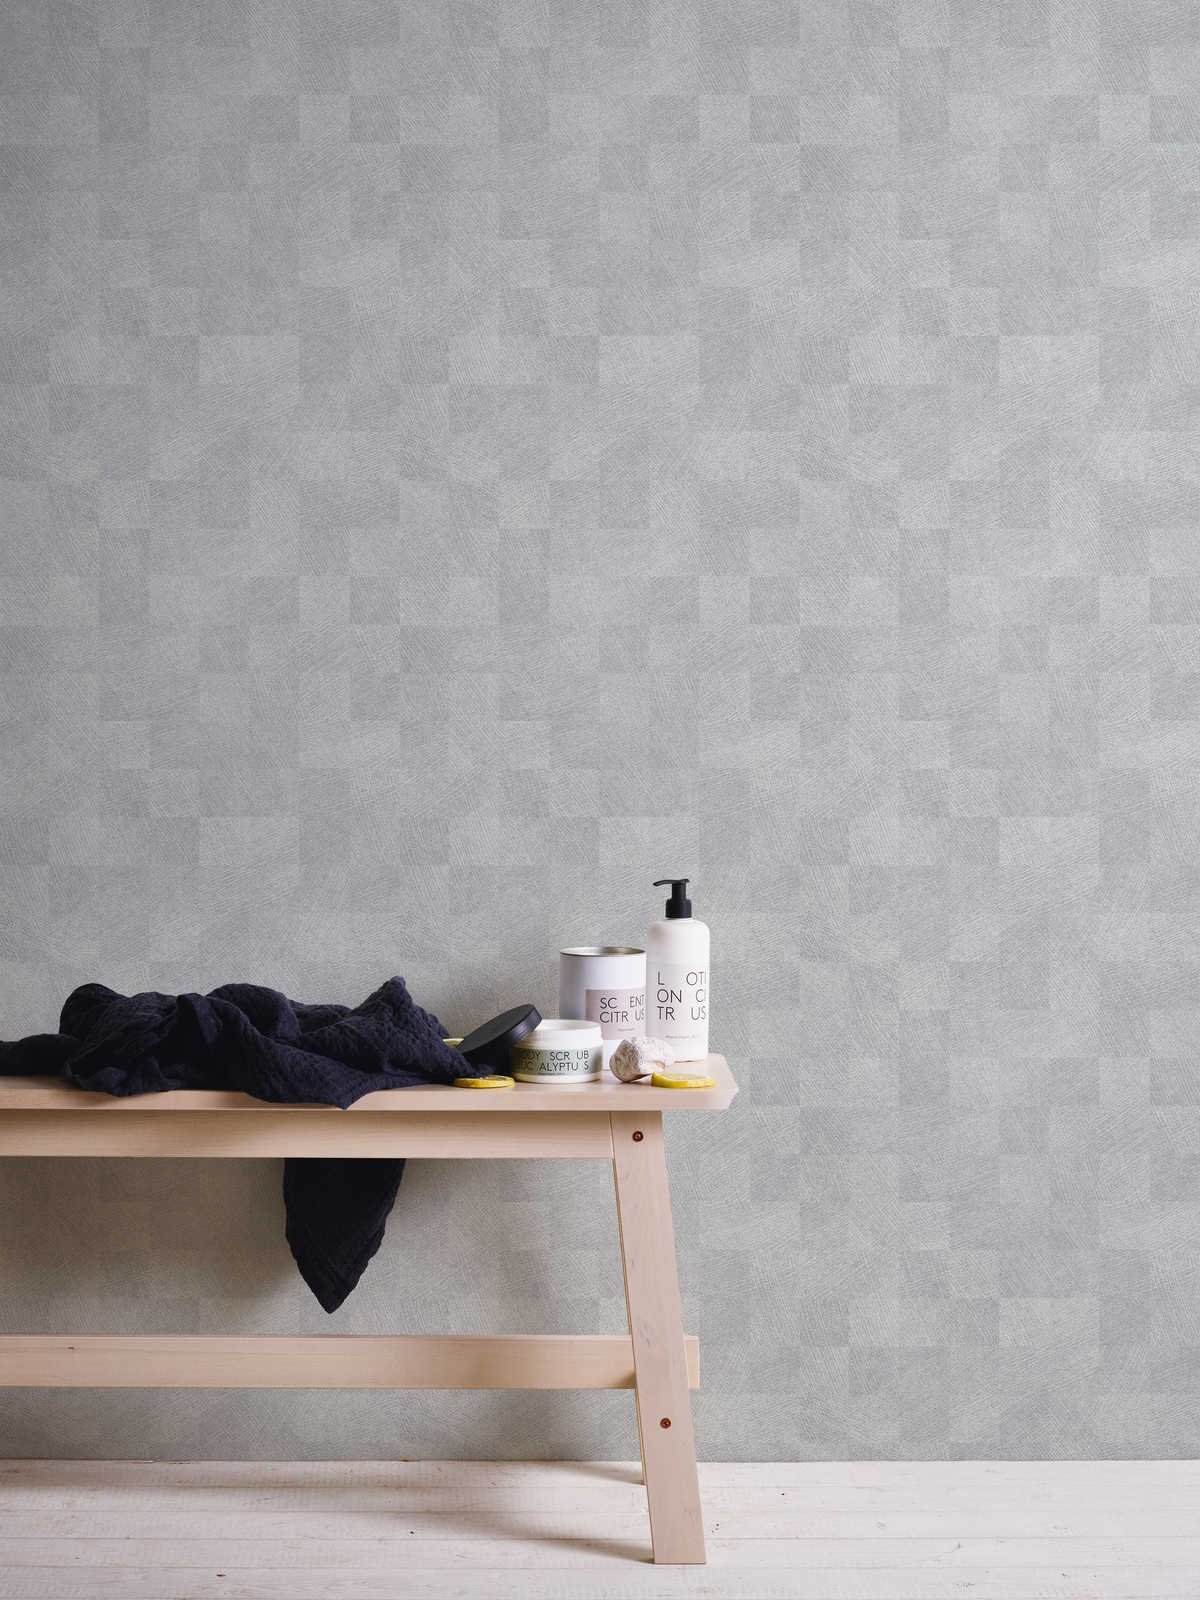             Metallic wallpaper check pattern with gloss effect - grey
        